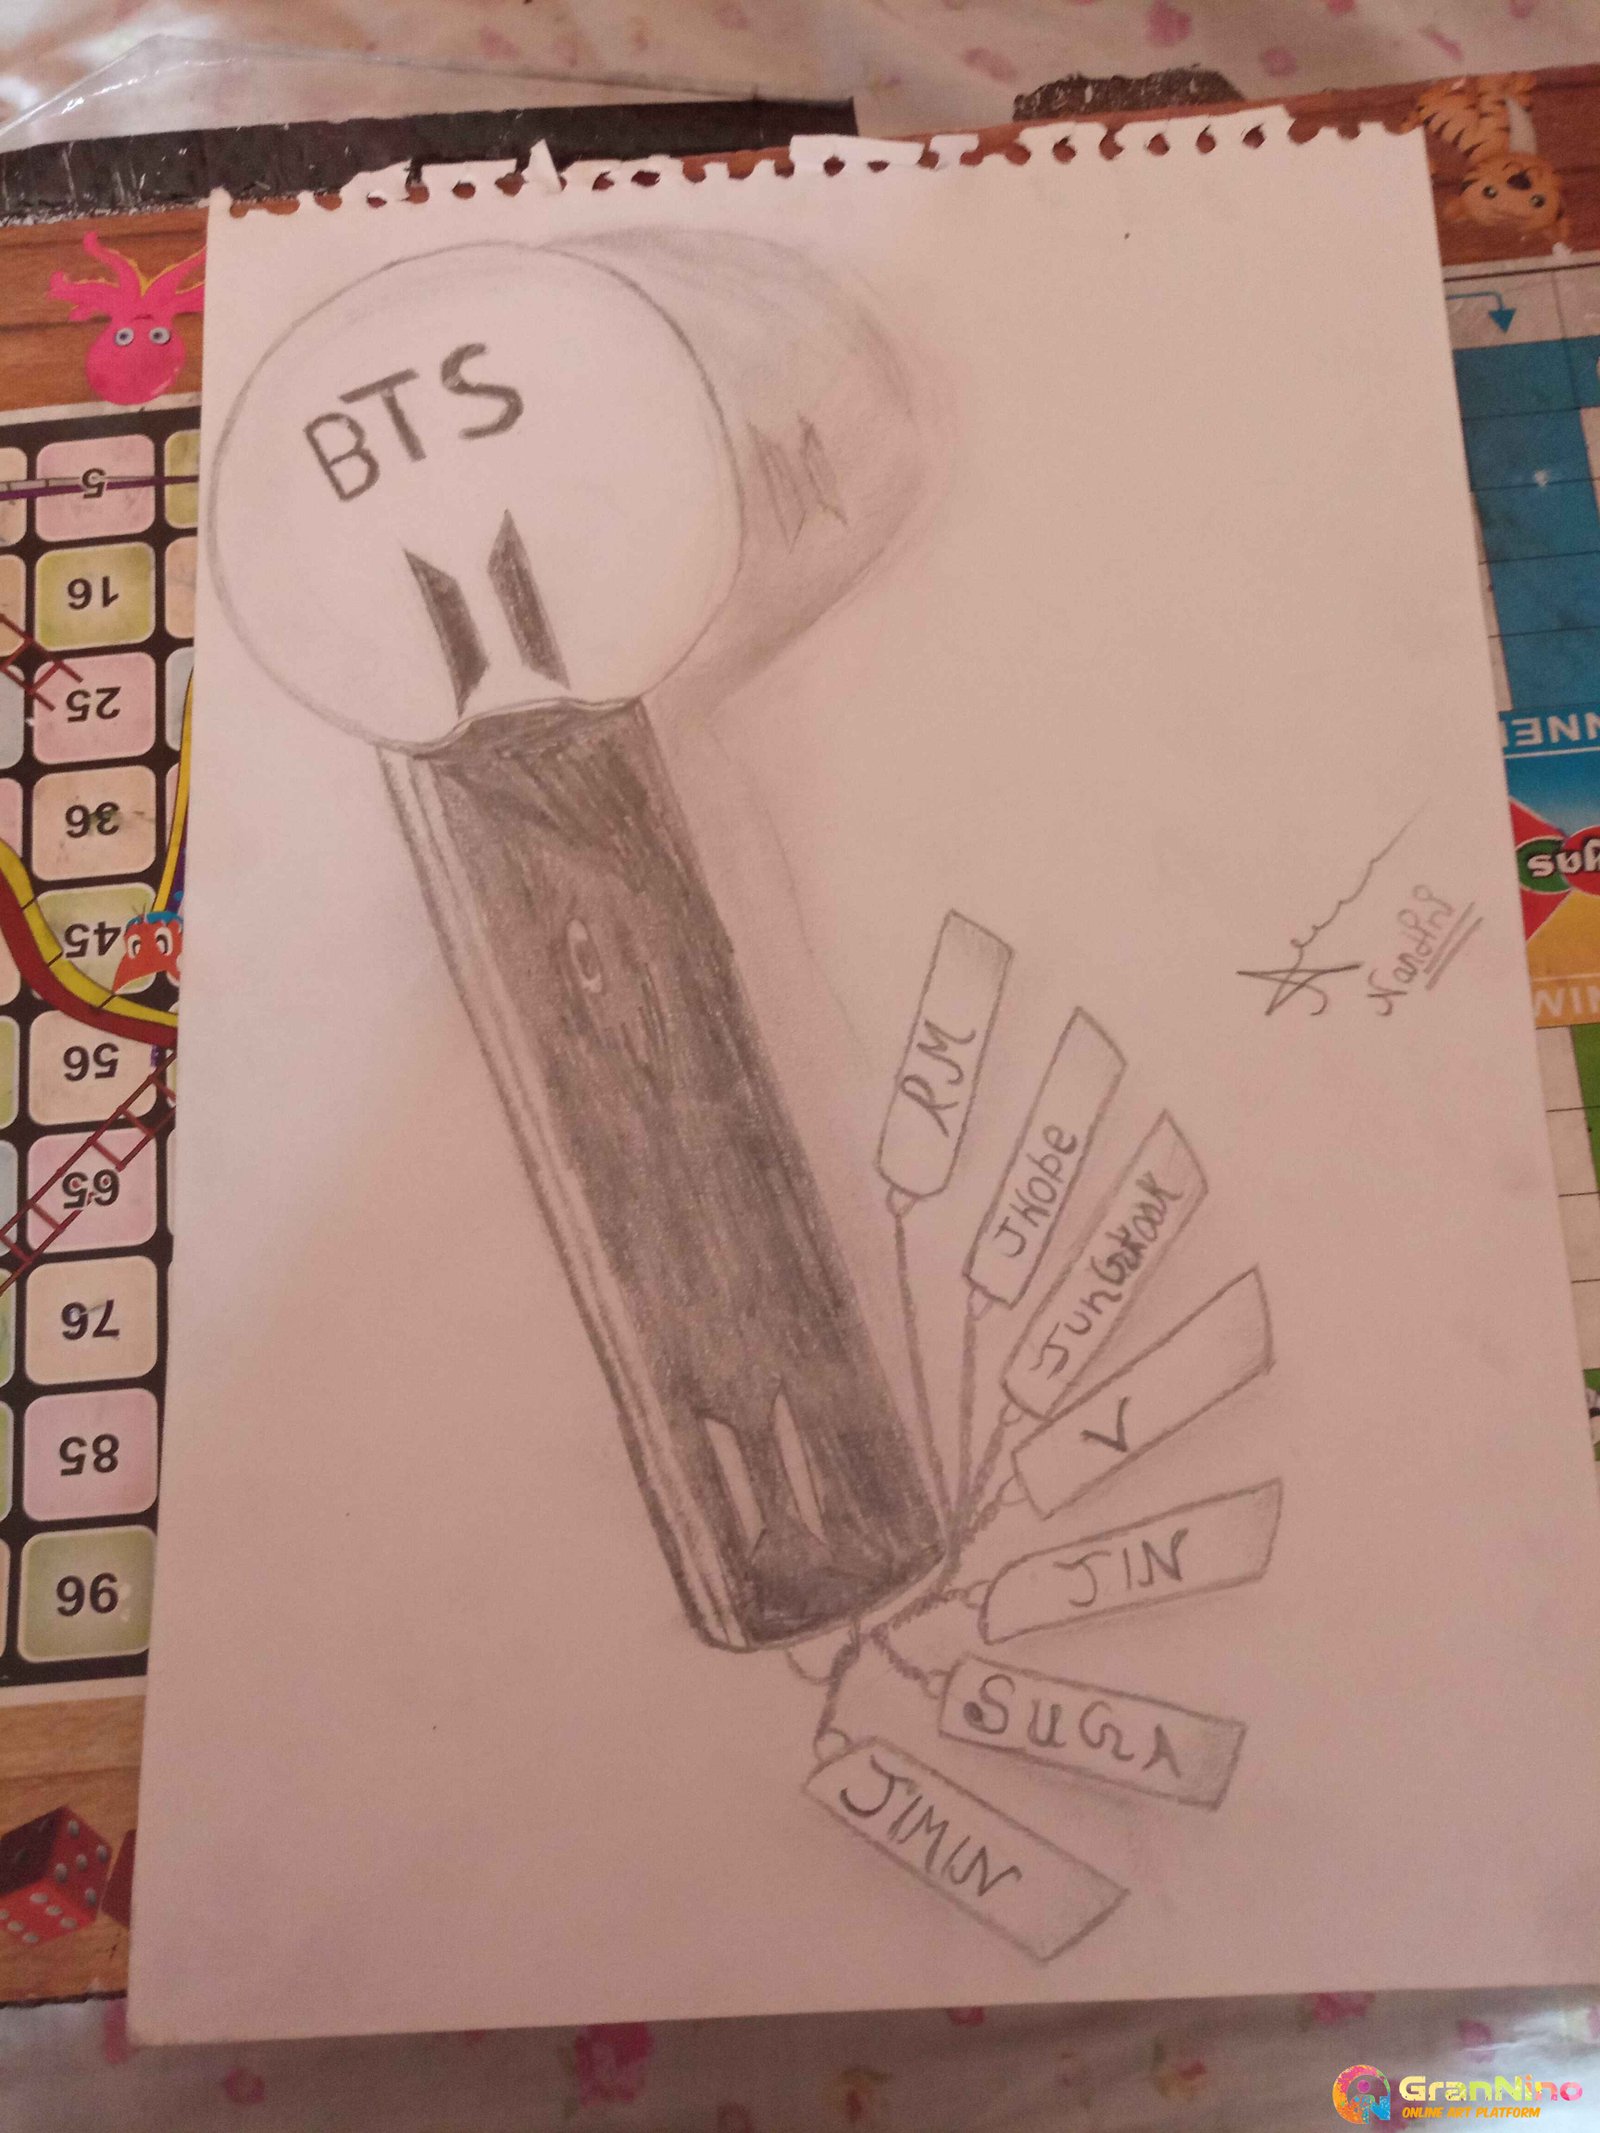 My drawings! - BTS Army-Bomb artwork - Wattpad